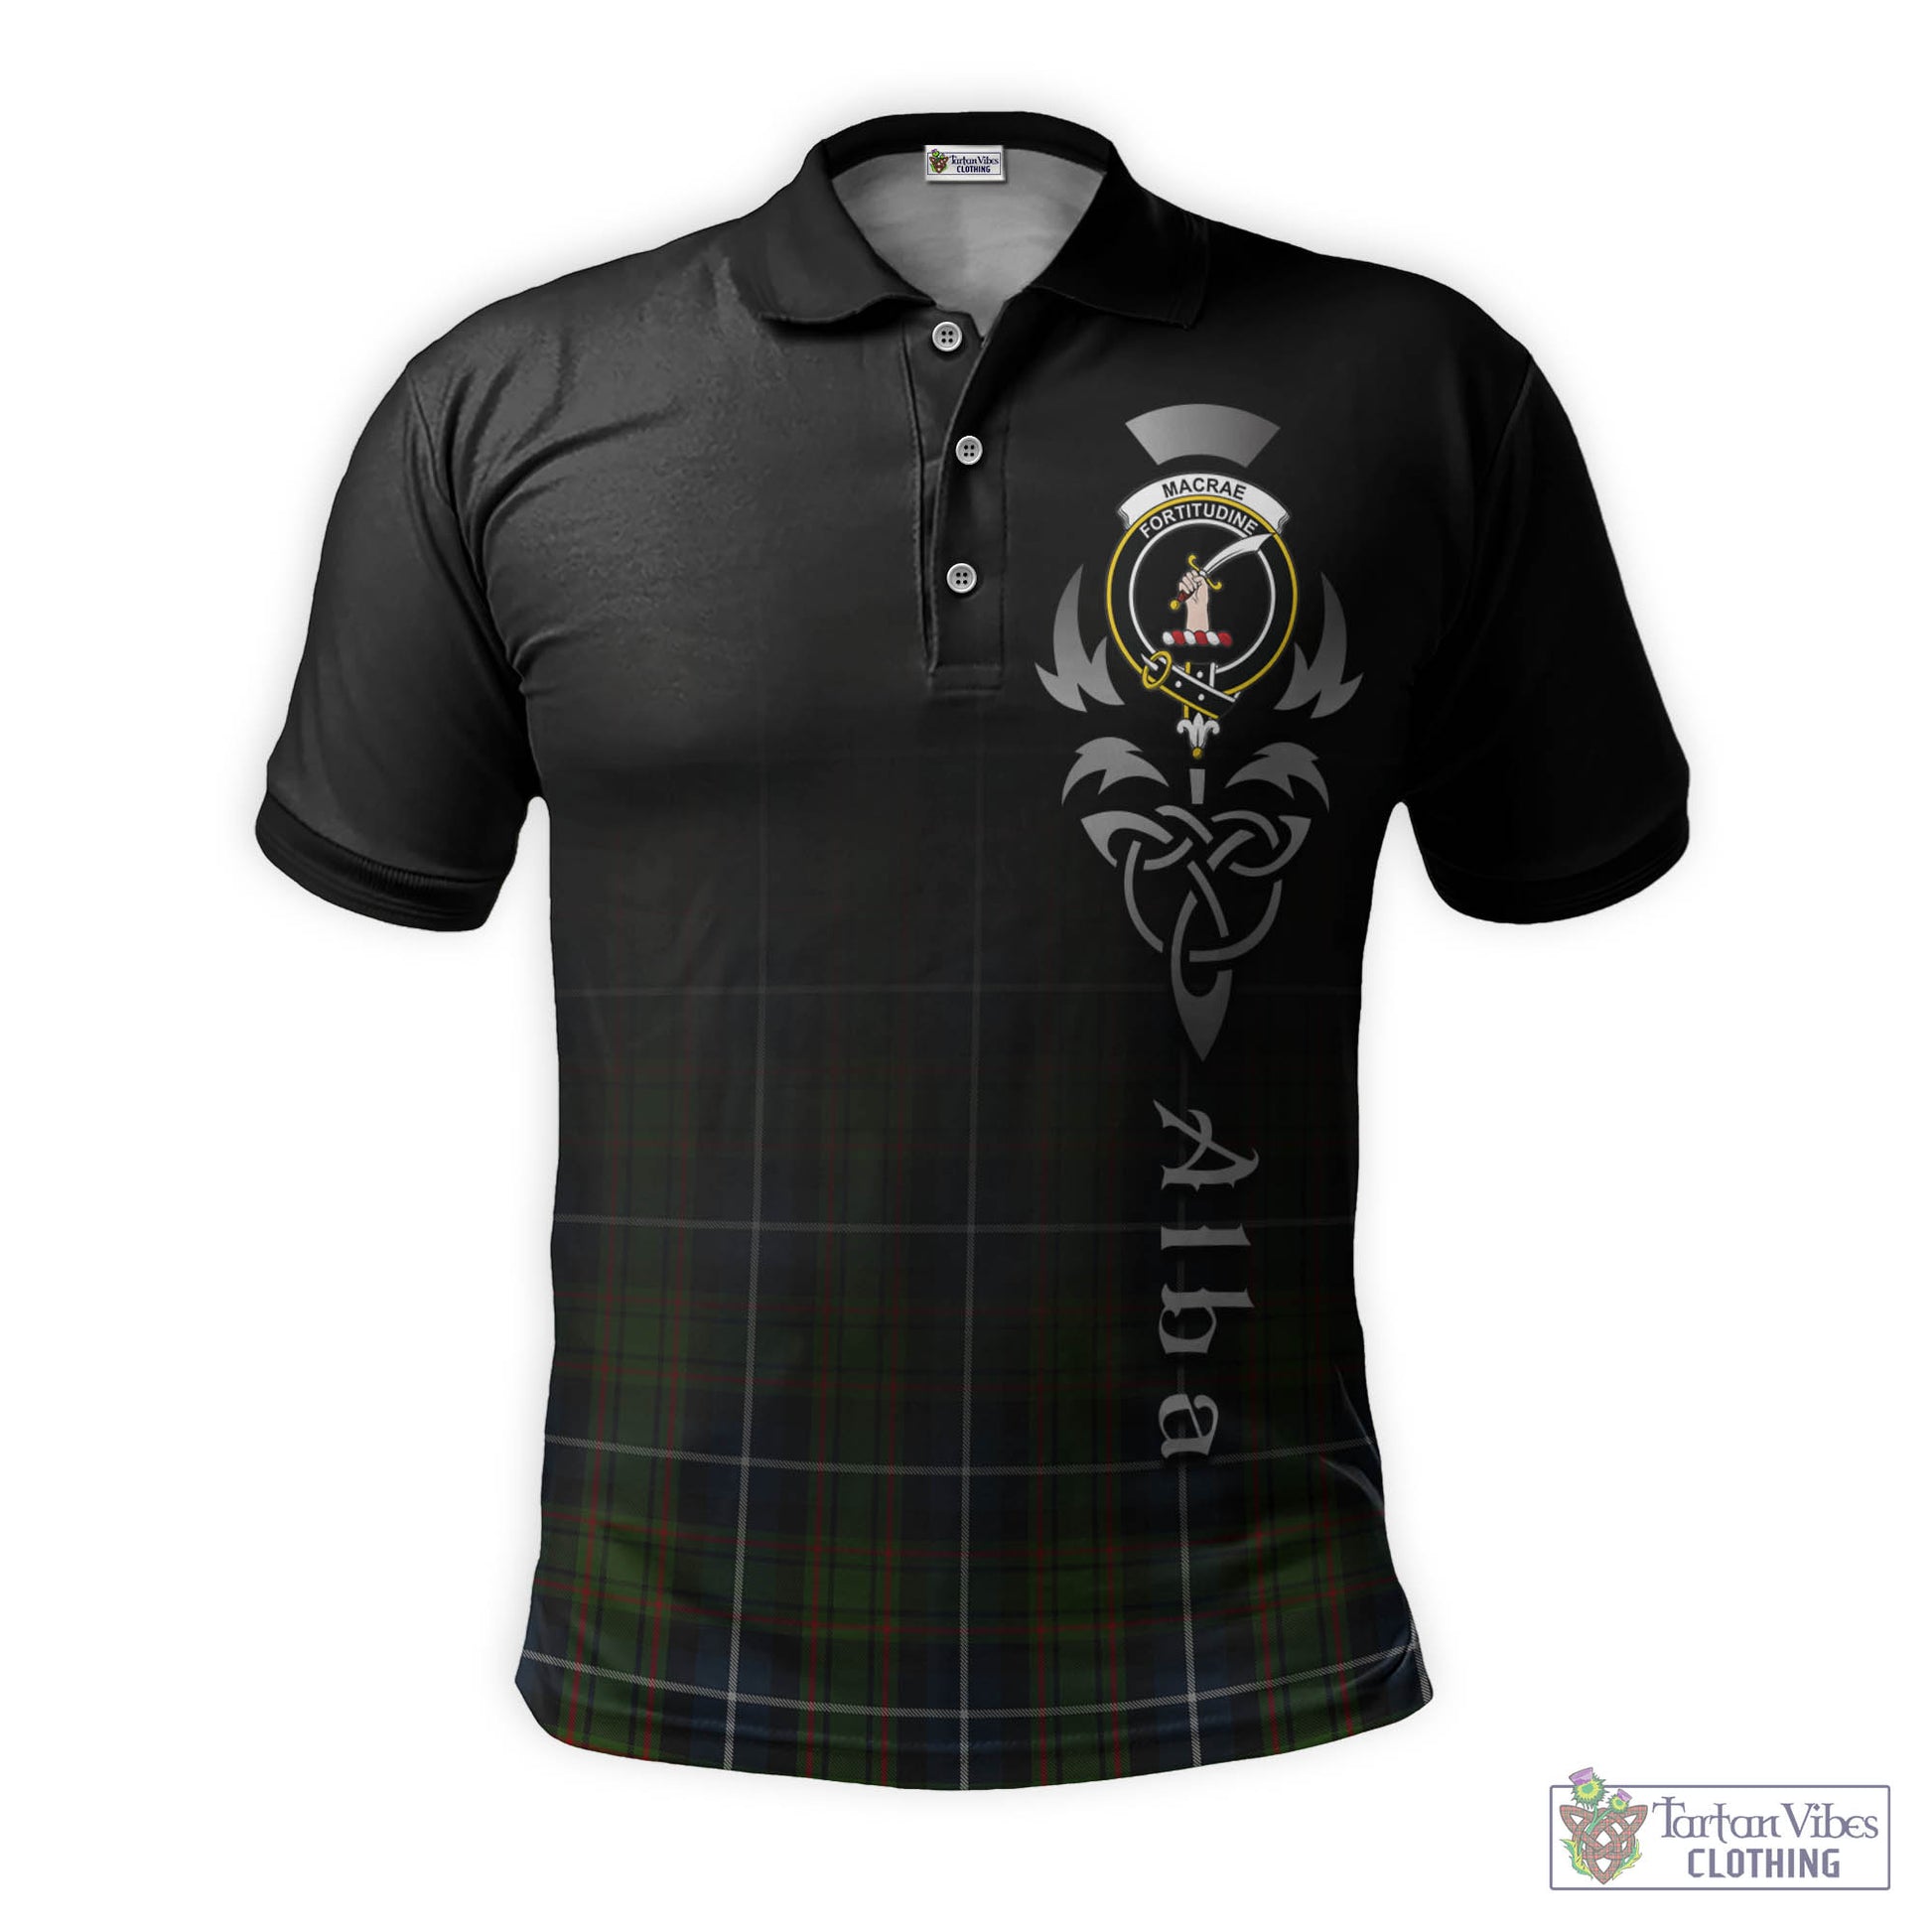 Tartan Vibes Clothing MacRae Hunting Tartan Polo Shirt Featuring Alba Gu Brath Family Crest Celtic Inspired